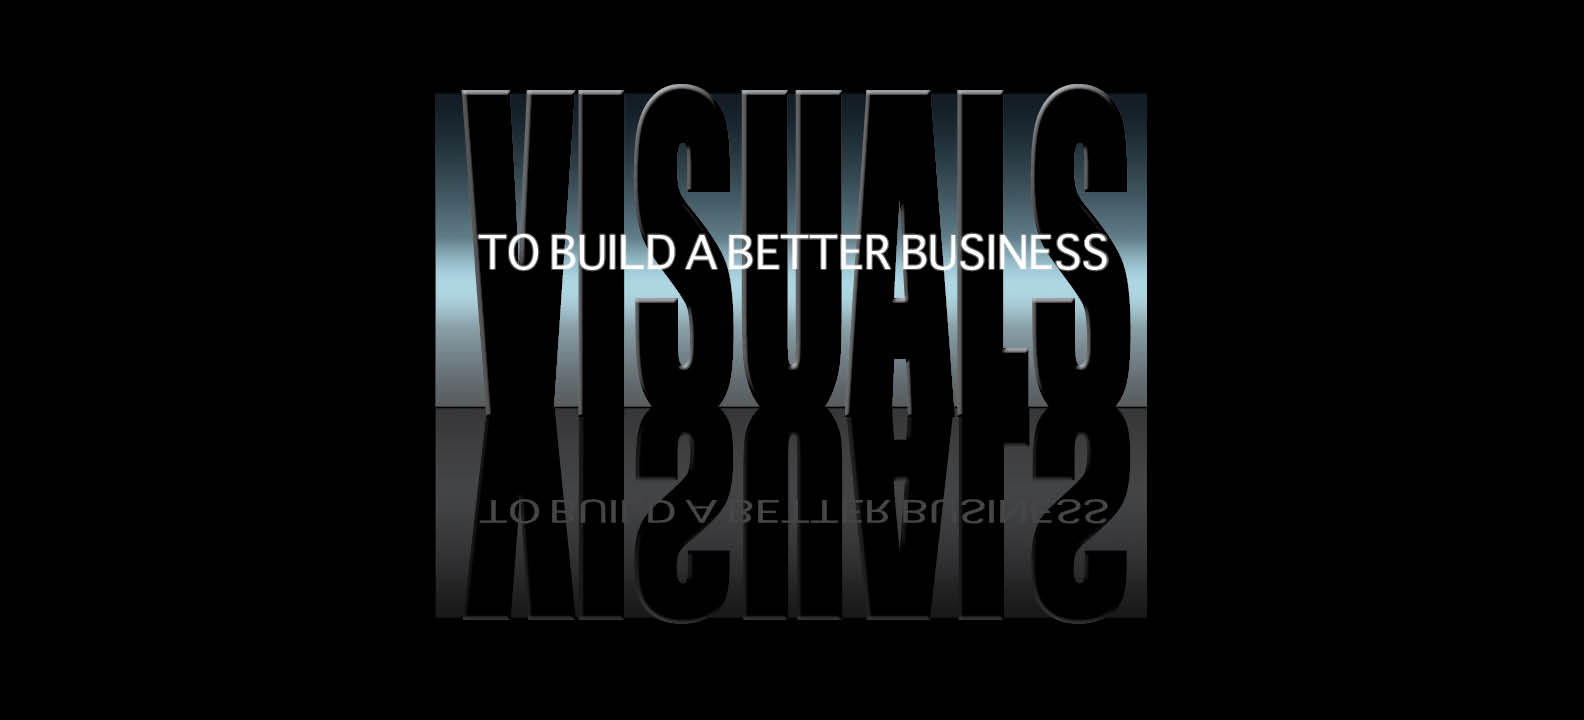 Visuals Build a Better Business